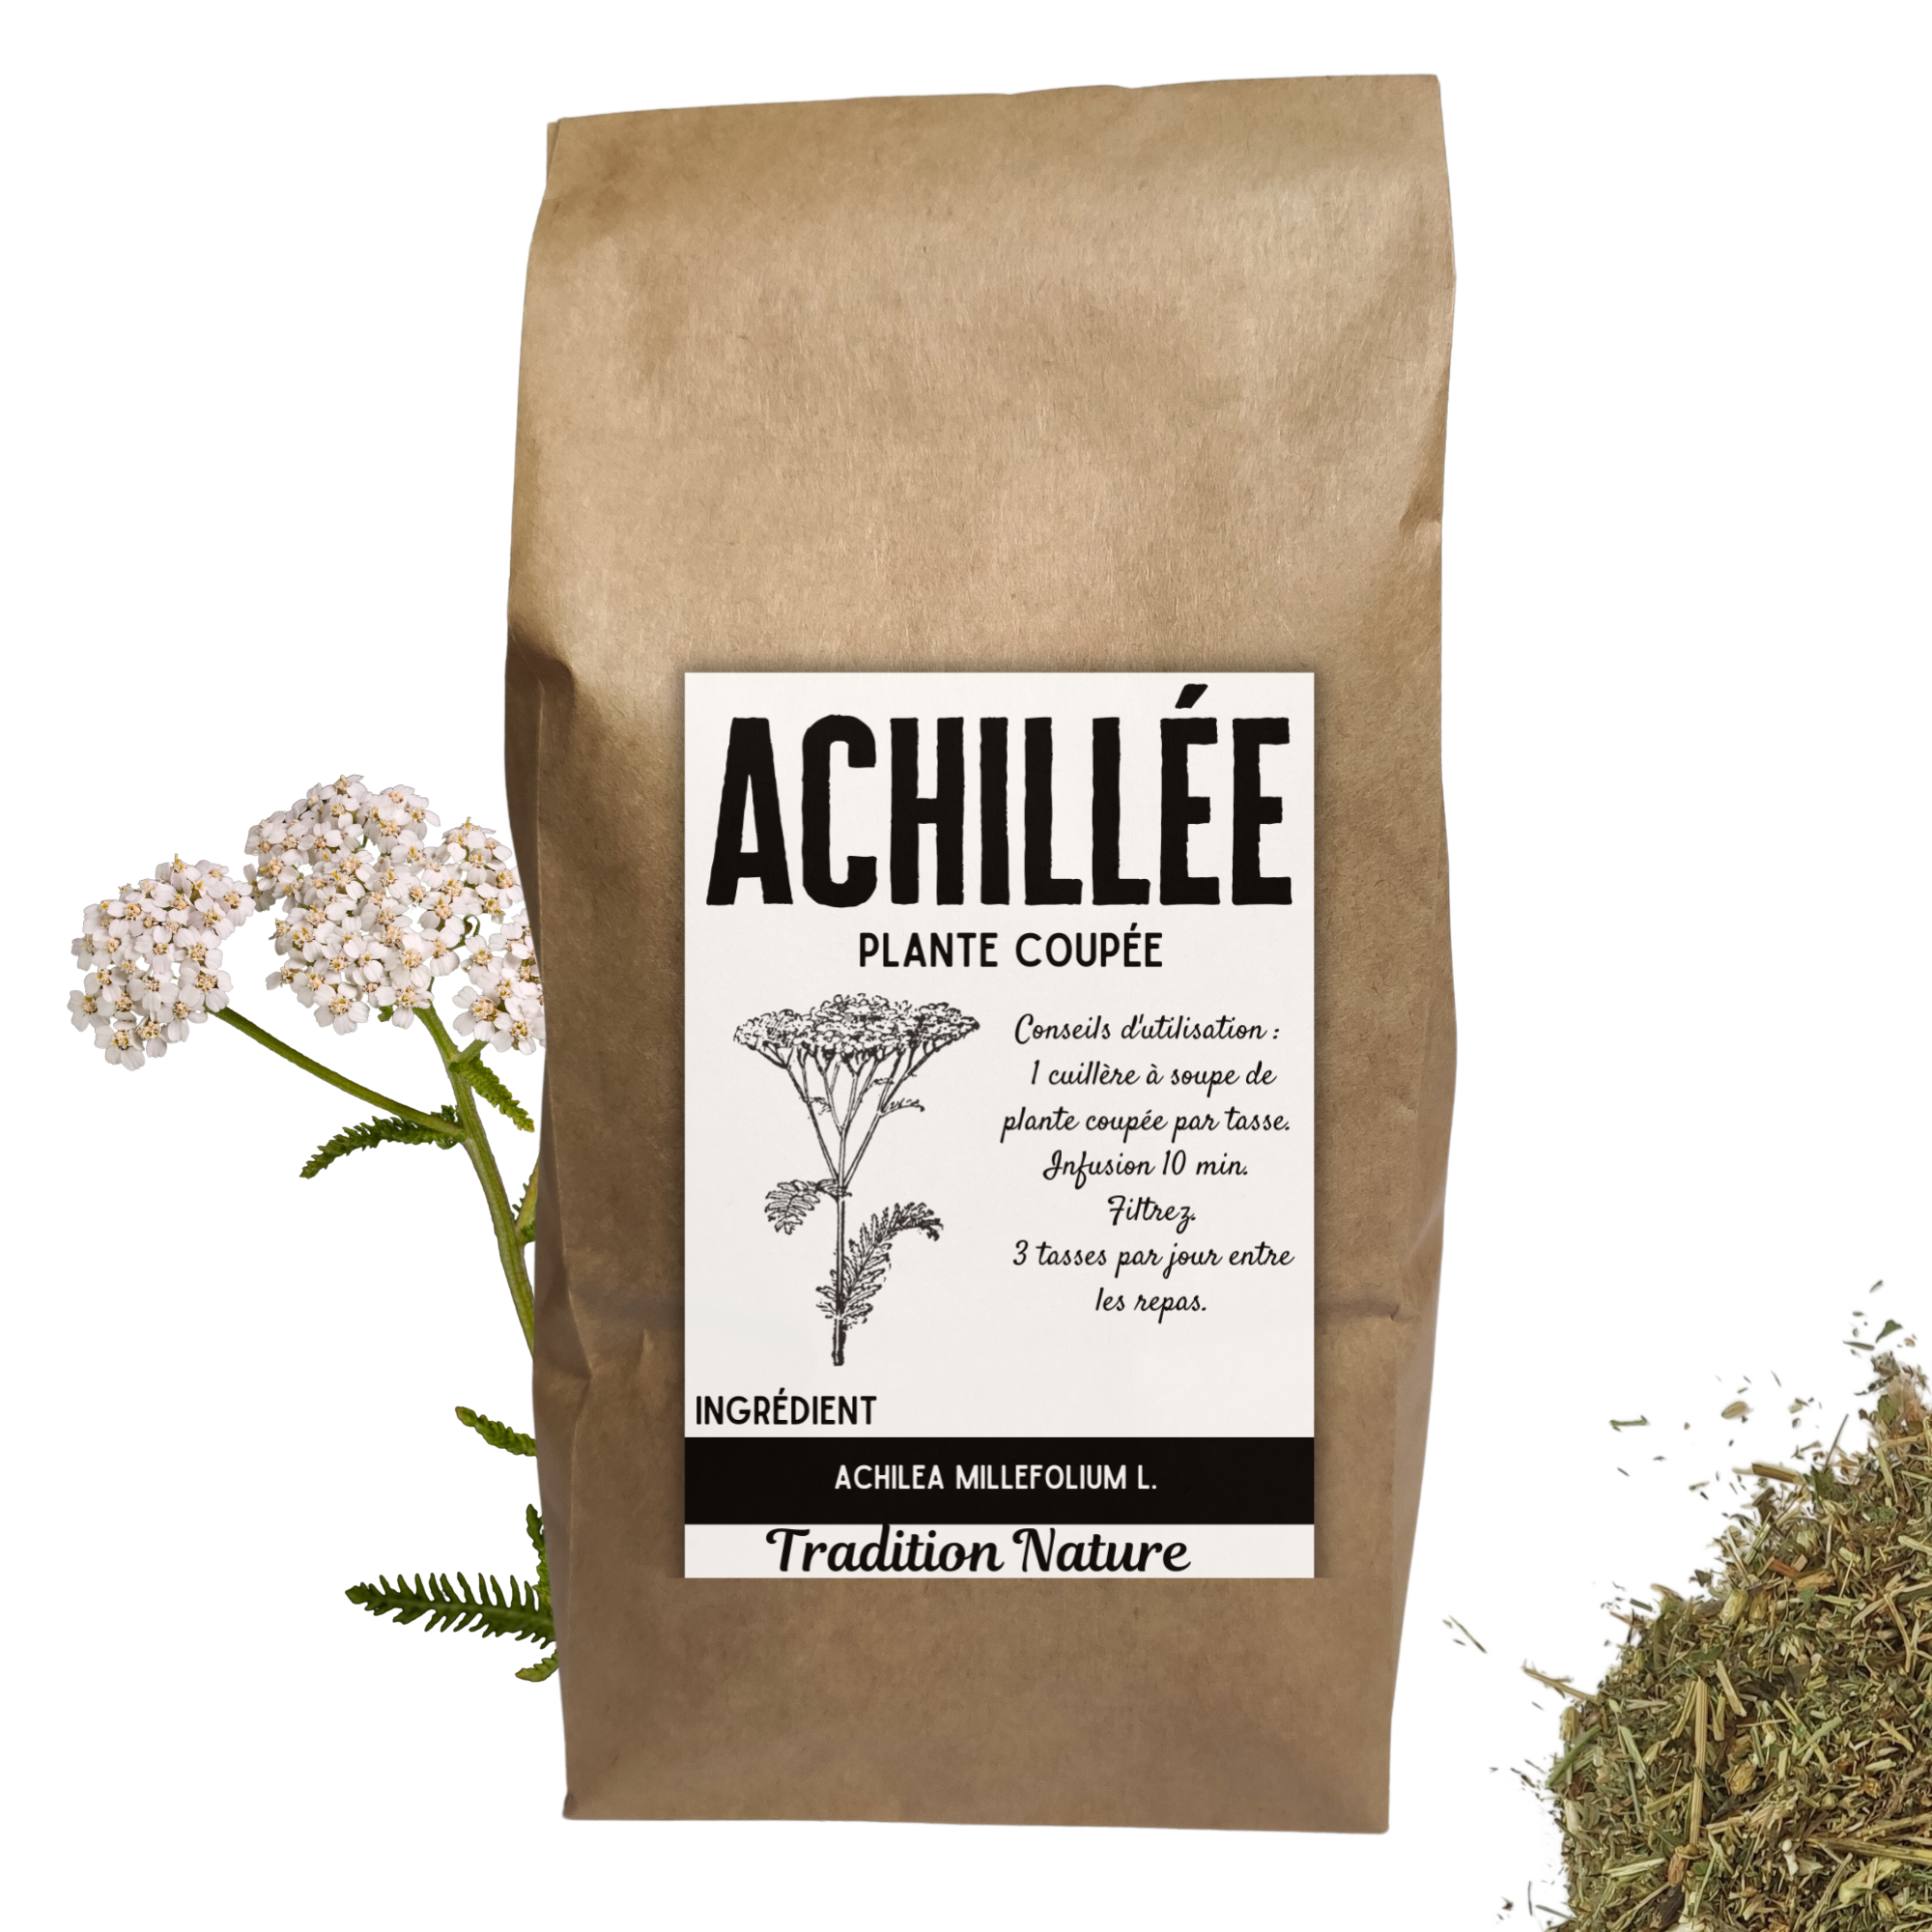 Huile essentielle : Achillée millefeuille (Achillea millefolium) -  cicatrisante et astringente.